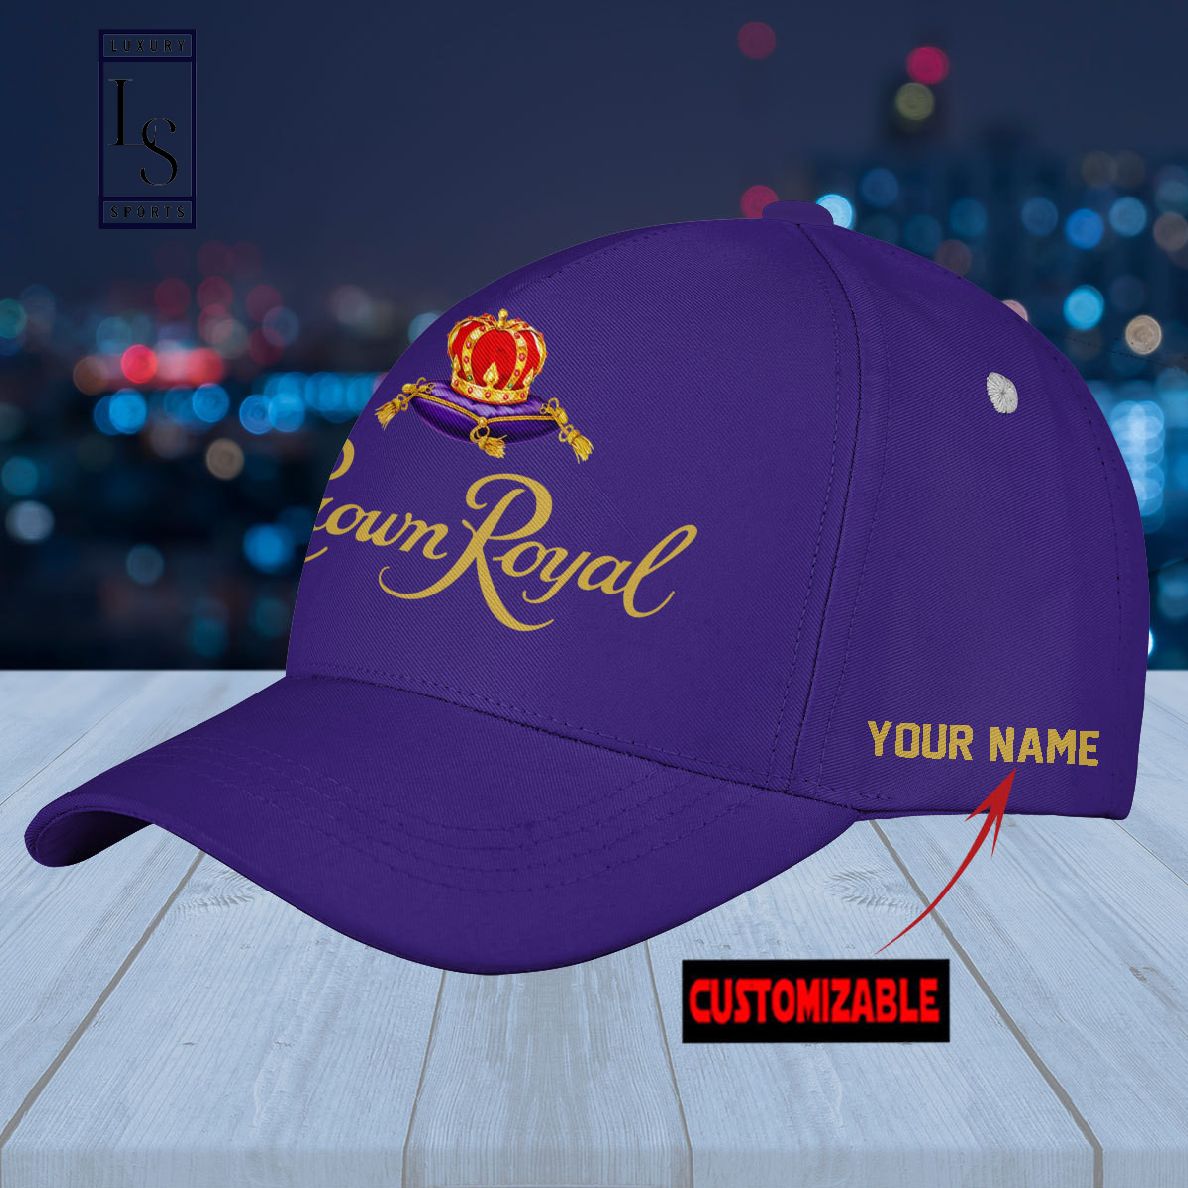 Crown Royal Customized Baseball Cap